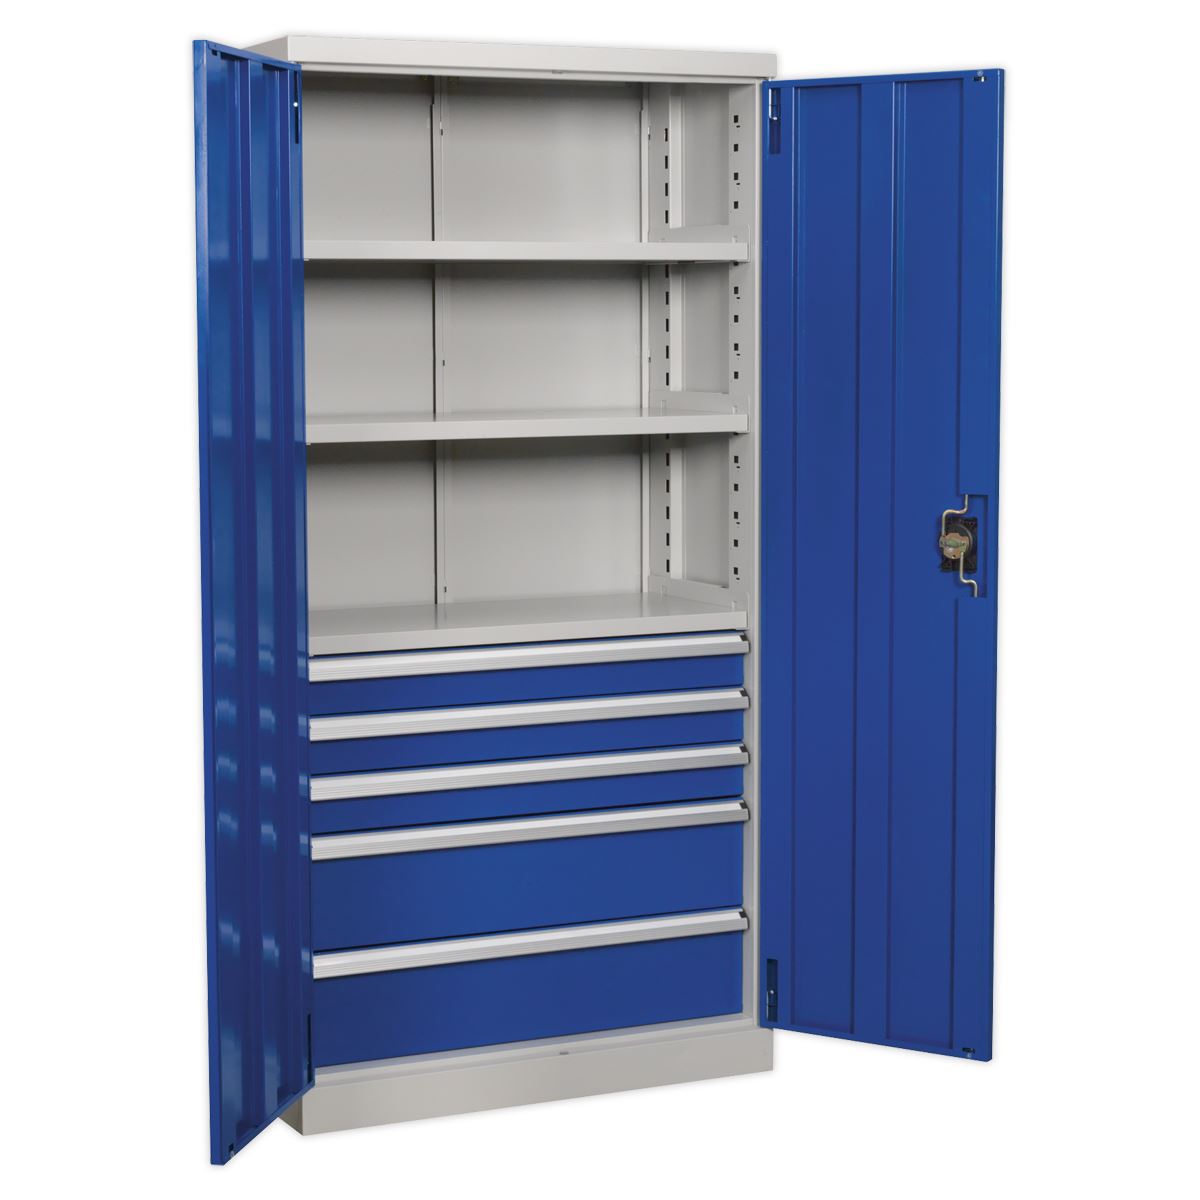 Sealey Premier Industrial Industrial Cabinet 5 Drawer 3 Shelf 1800mm